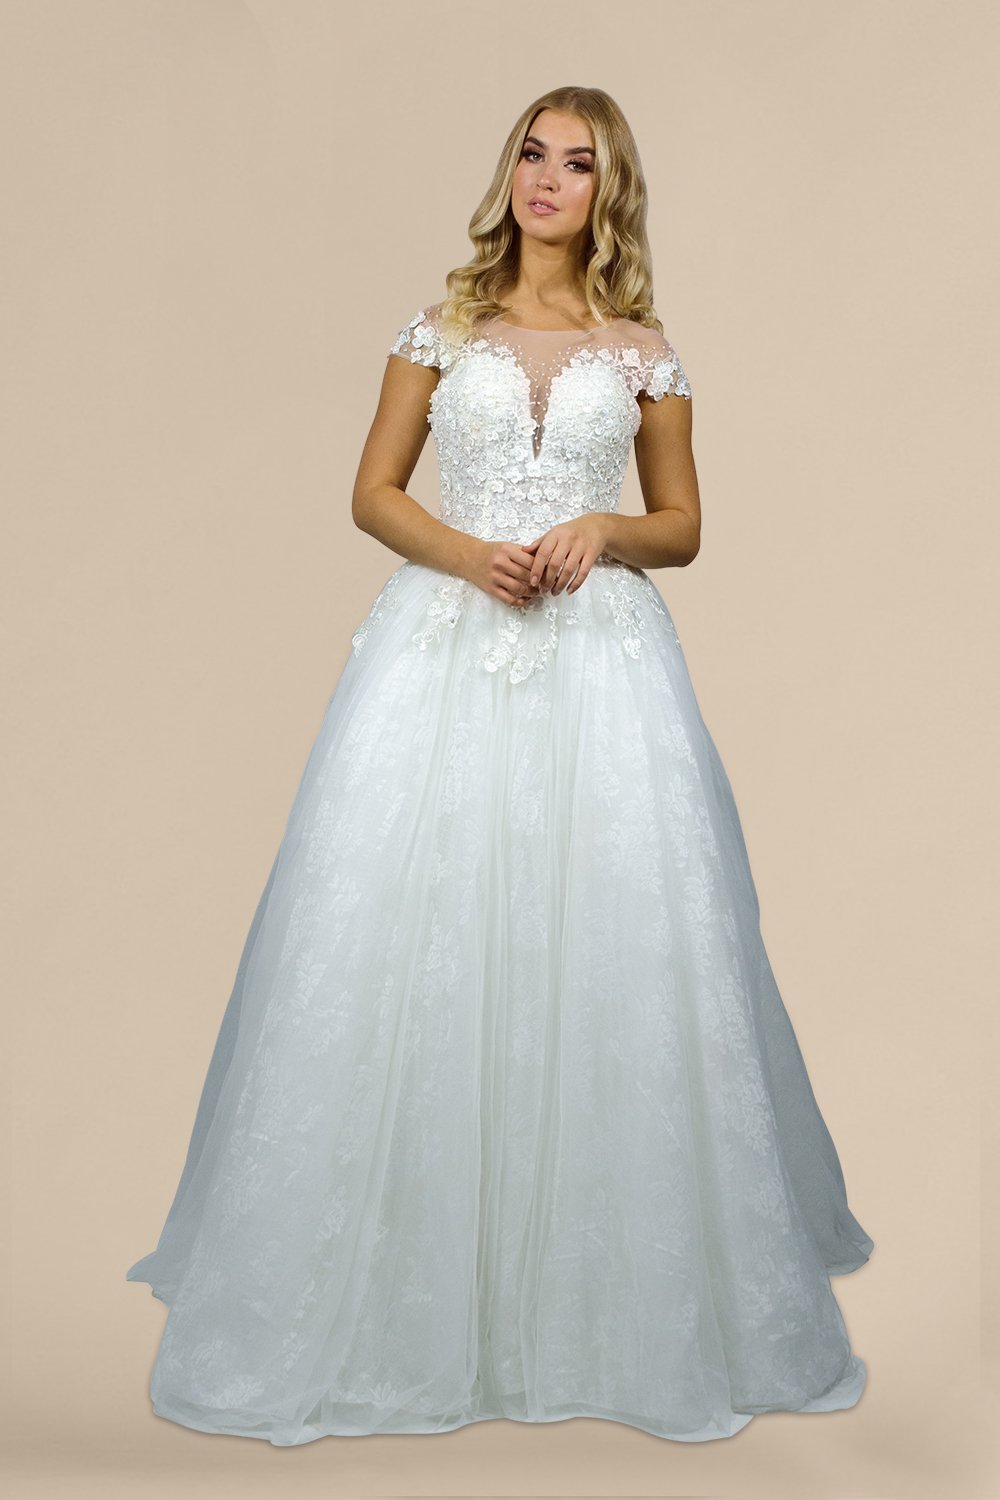 custom wedding dress dressmaker perth australia north perth envious bridal & formal